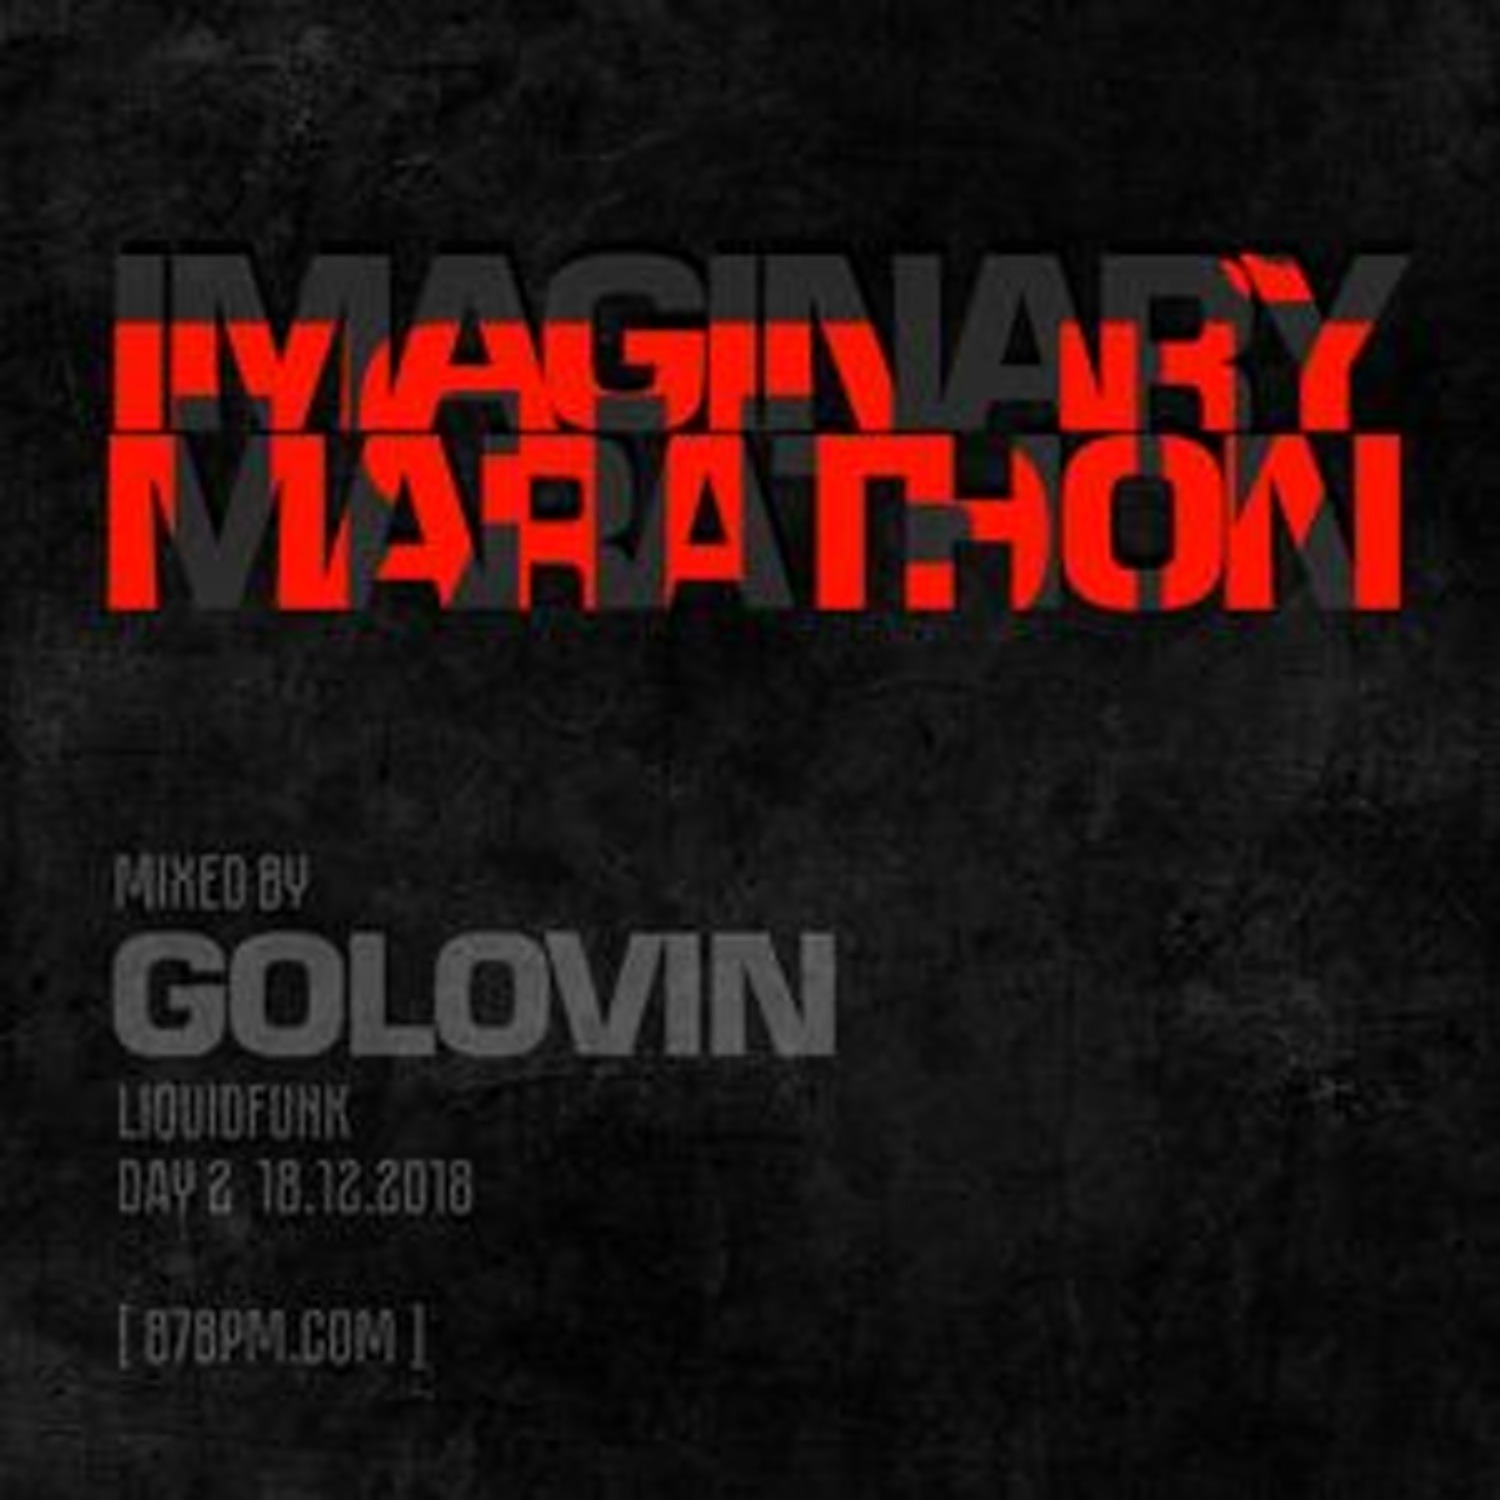 GOLOVIN - Imaginary Marathon V live @87bpm.com (drum'n'bass, liquid funk, mixed 2018)